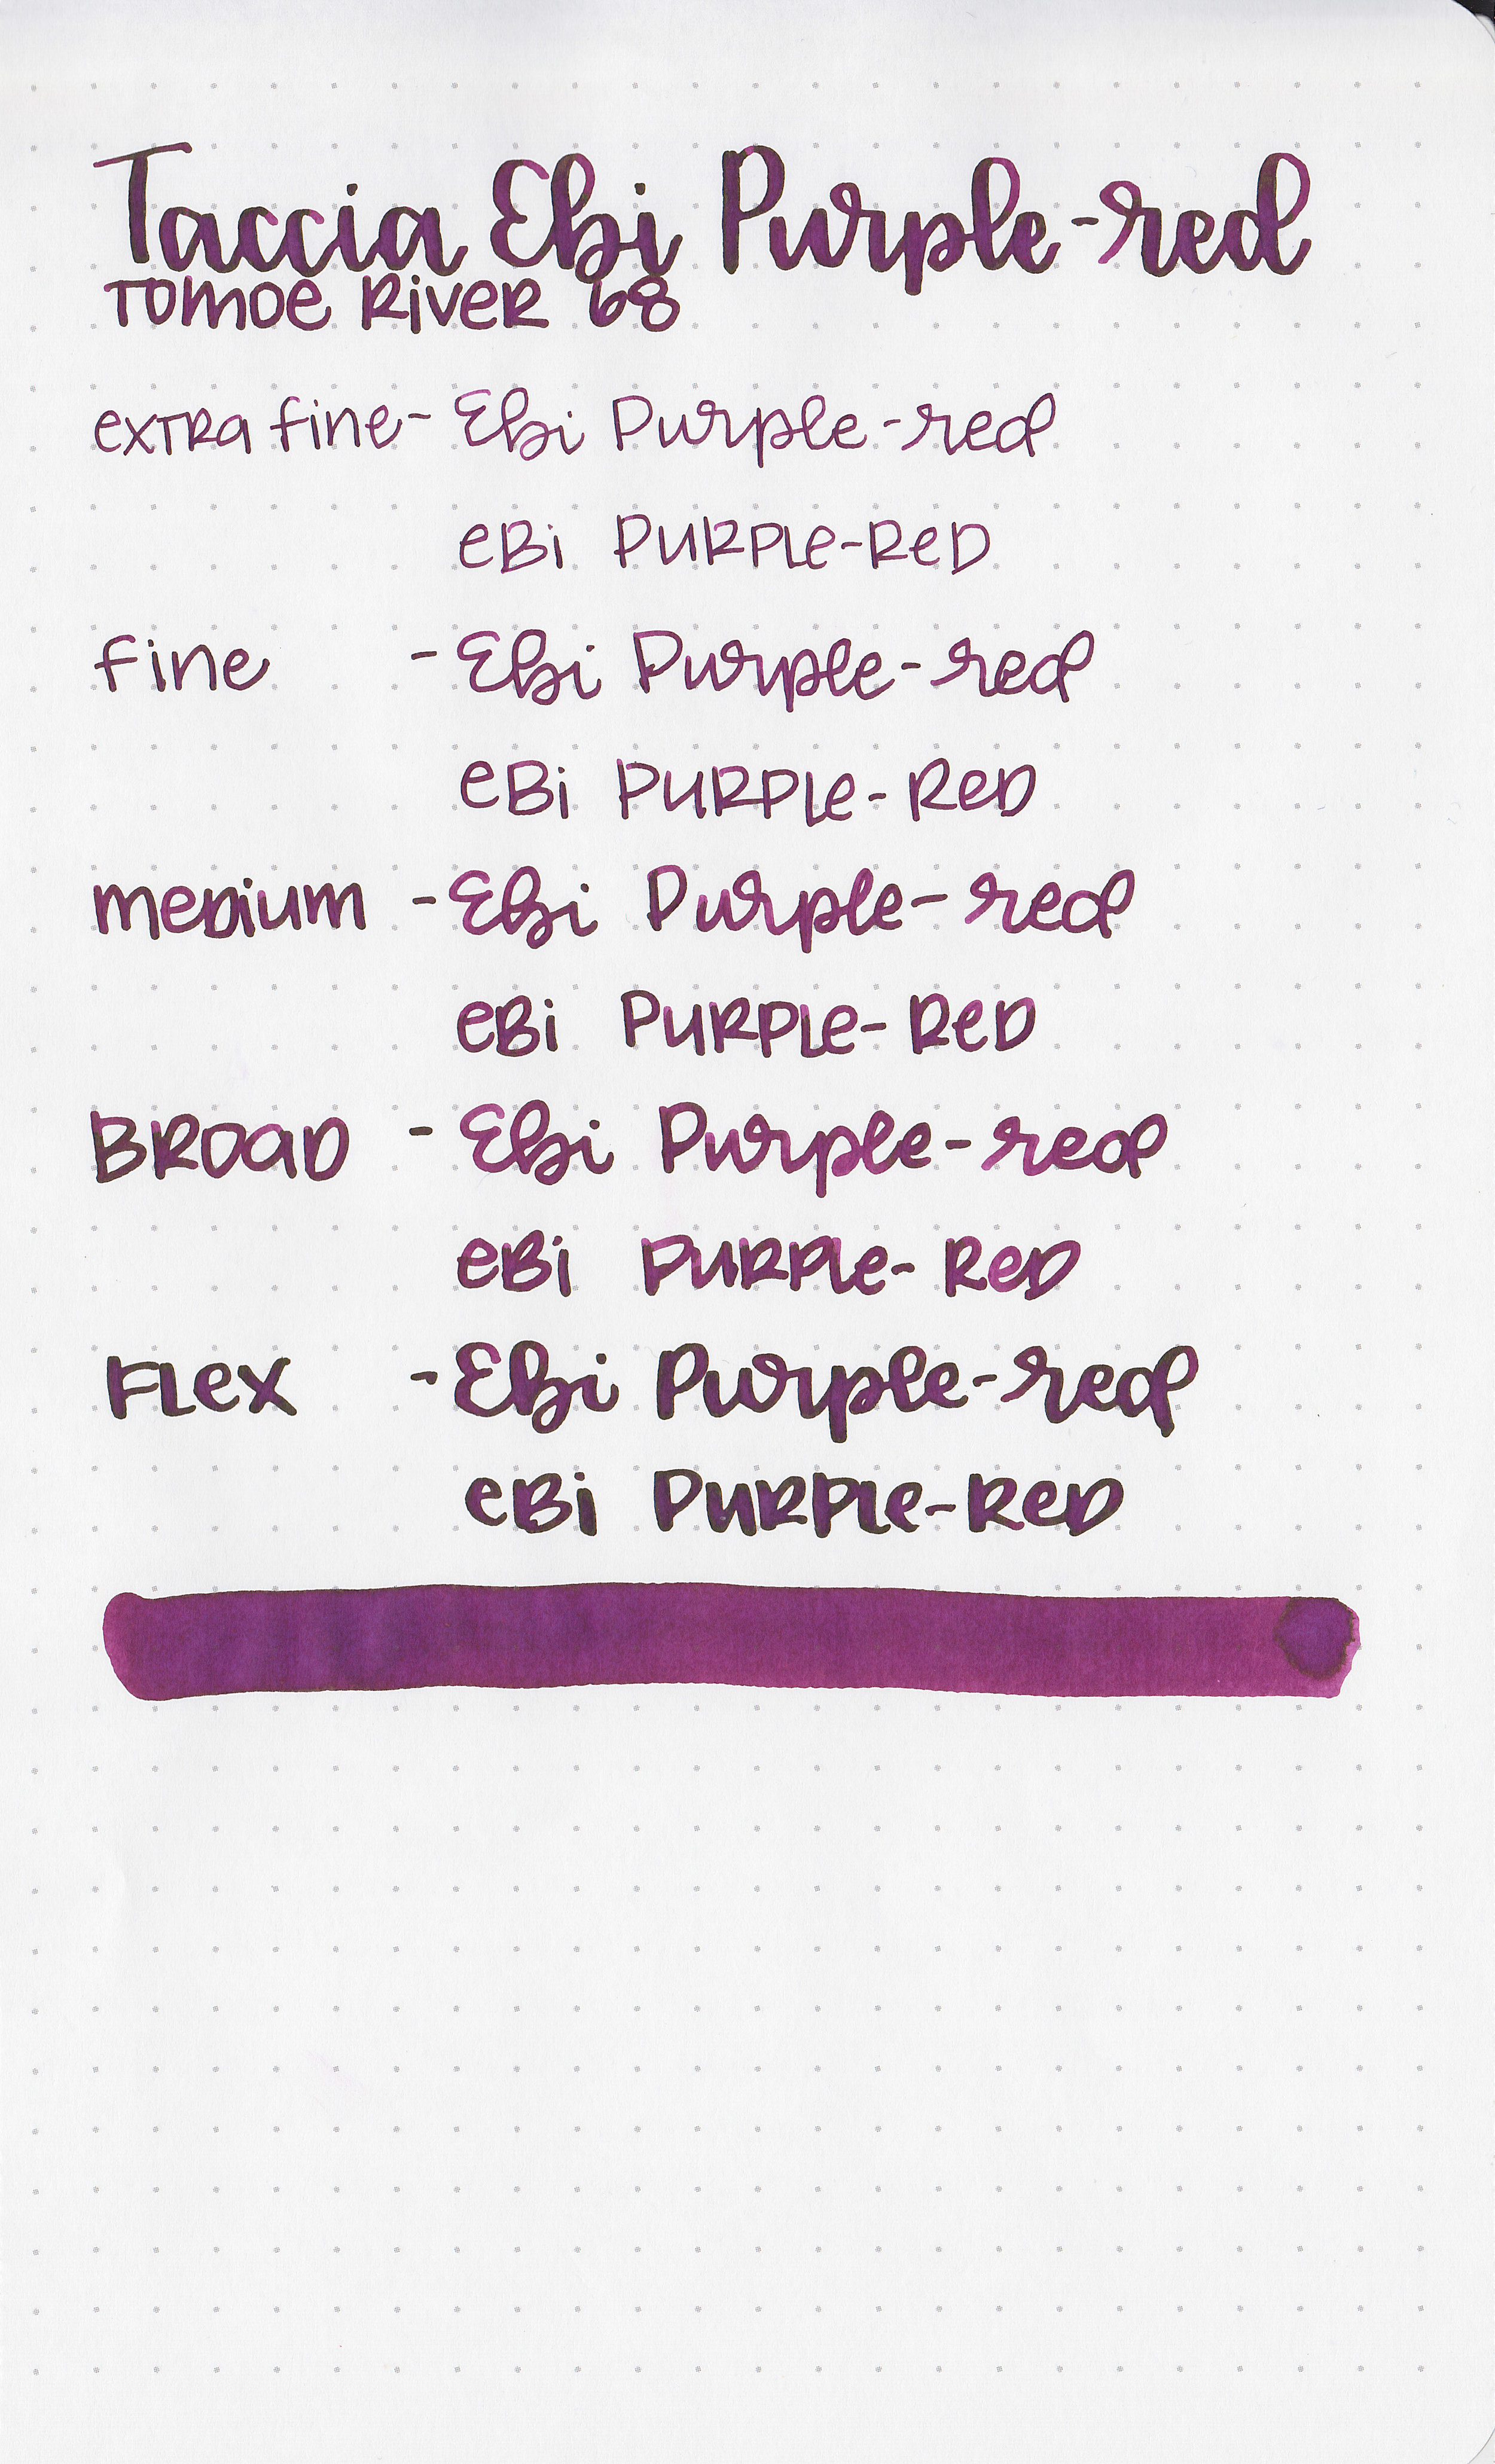 tac-ebi-purple-red-11.jpg